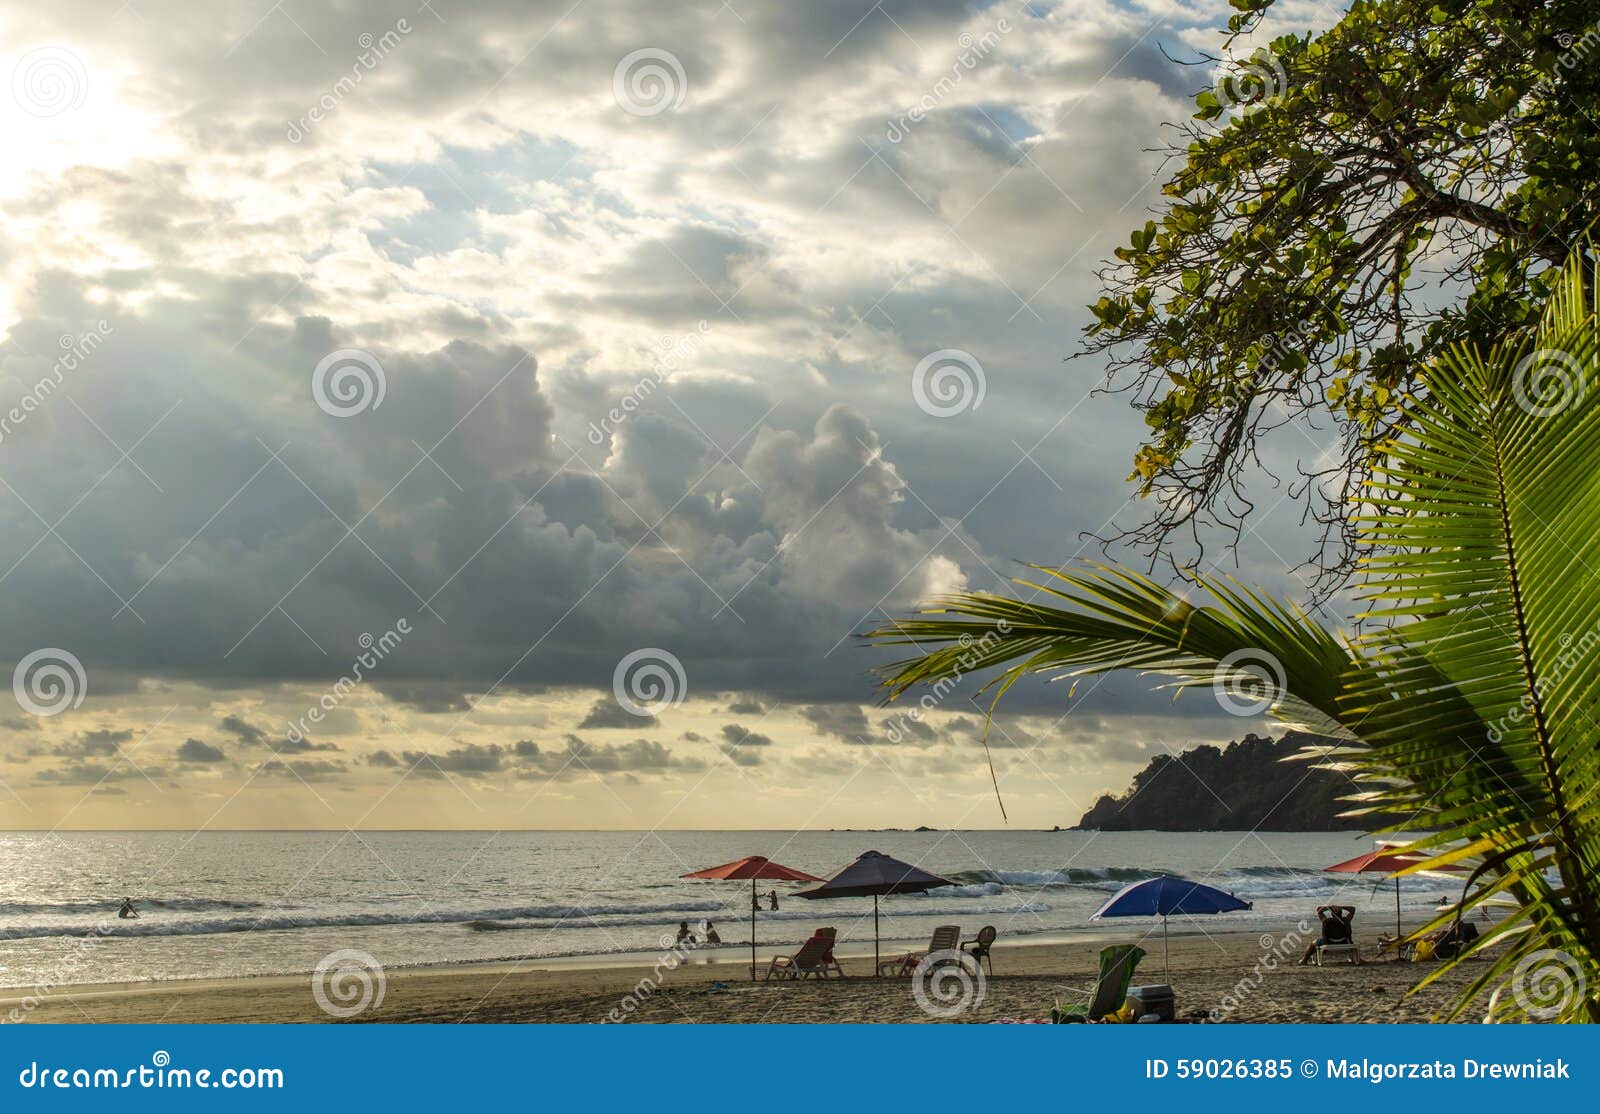 manuel antonio tropical beach - costa rica